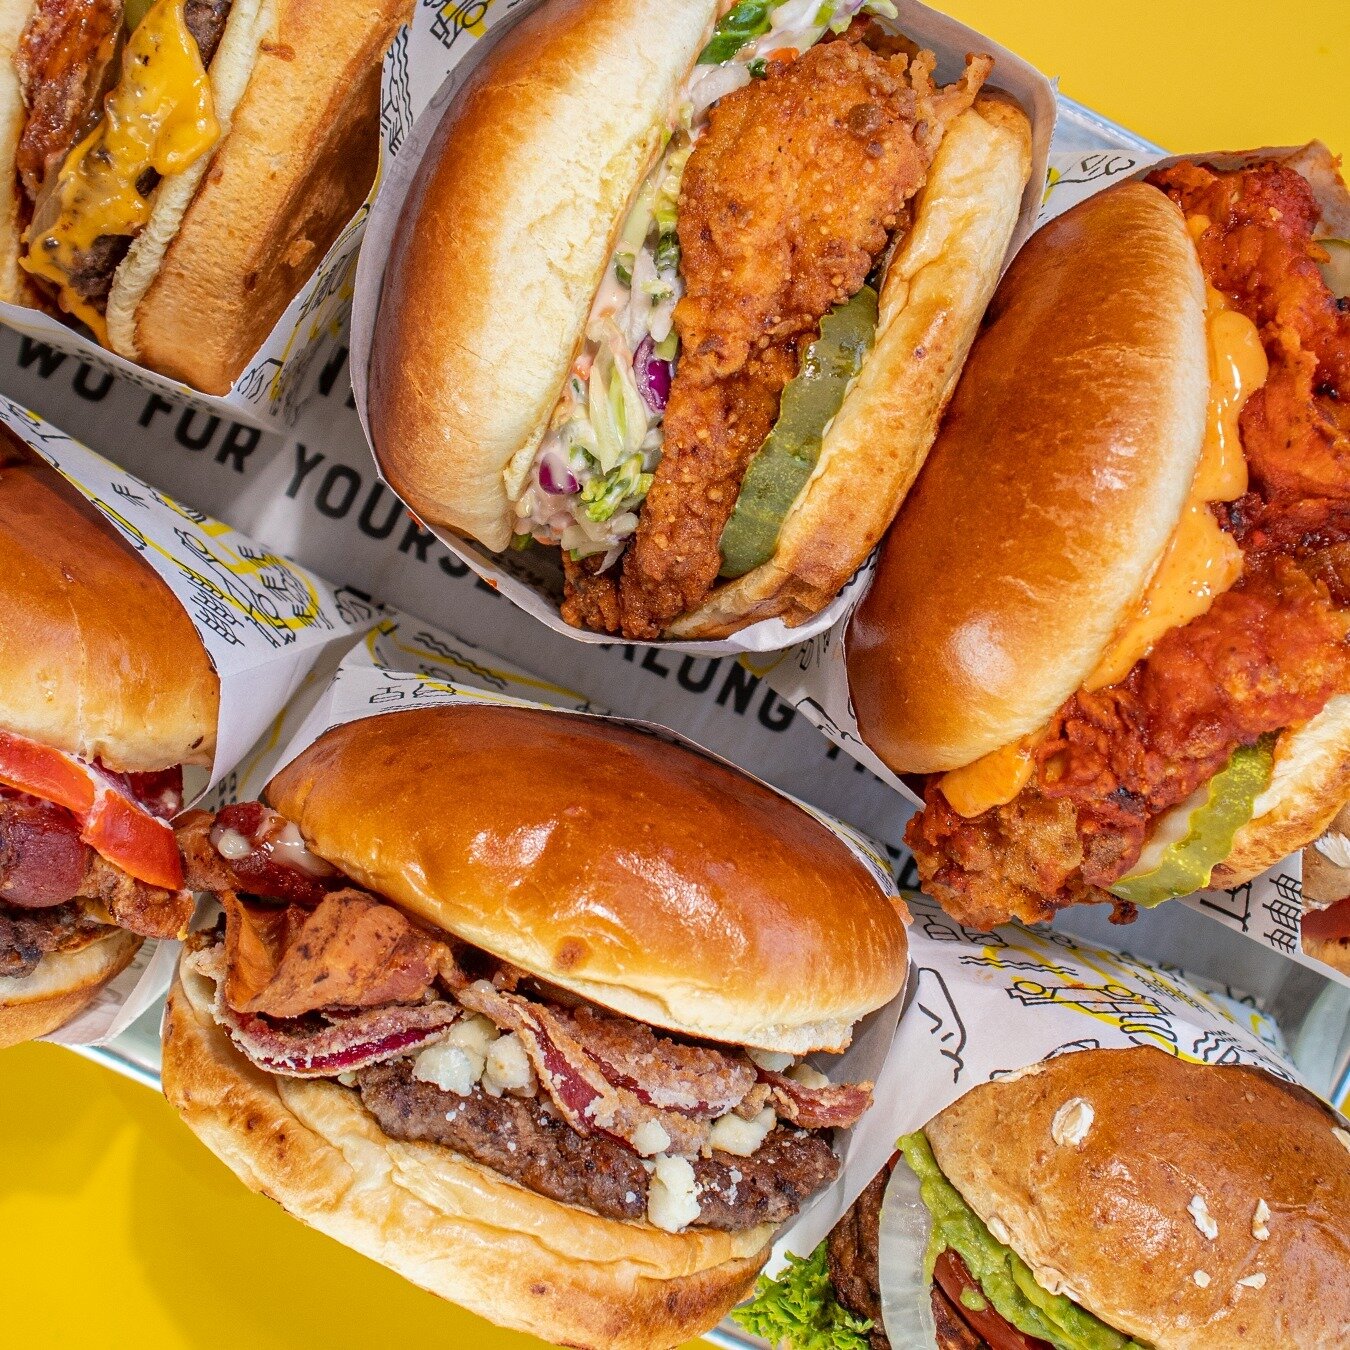 Top 3 your favorite Fresh Stack burger? Go! 👇
.
.
.
.
.
.
.
.
.
#freshstack #freshstackburger #noantibiotics #nohormones #allnatural #dinein #orderonline #supportlocal #supportsmallbusiness #spoonfed #chicagofoodauthority #chicagoeats  #eat #burgers